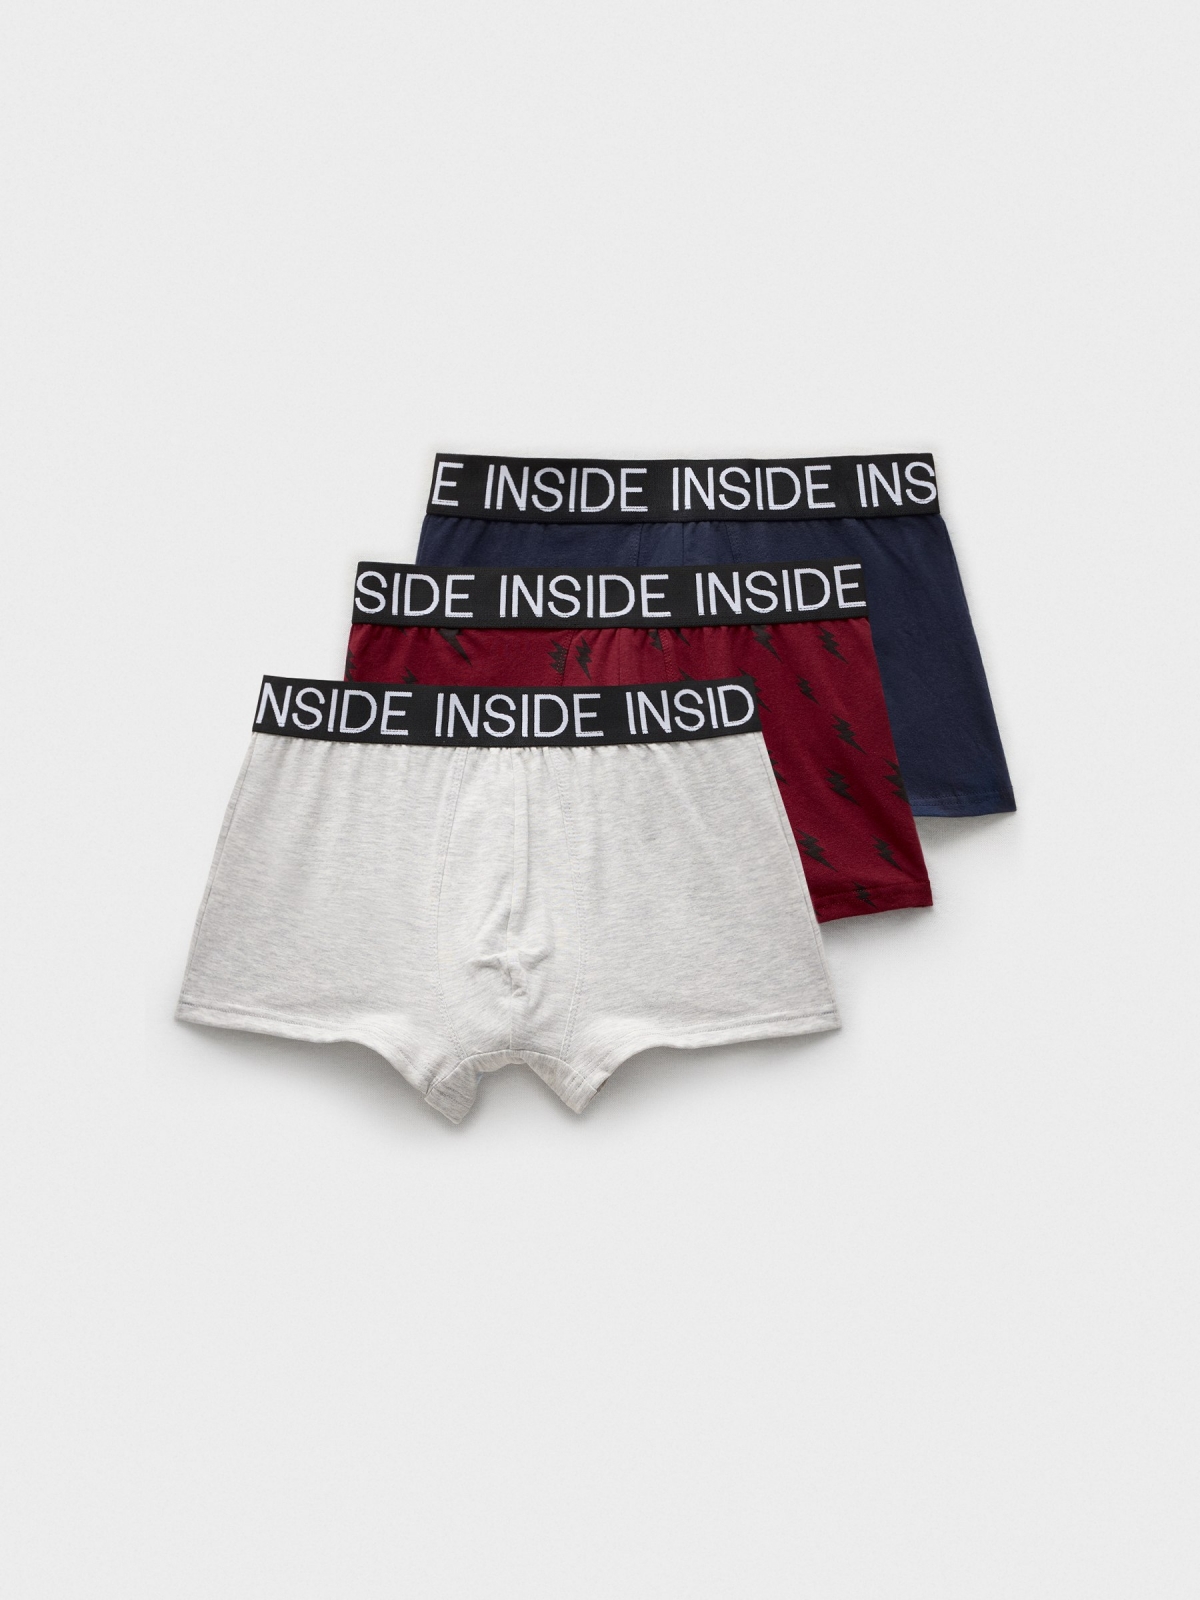 gradualmente lado desconocido Calzoncillo boxer pack 6 | Ropa Interior Hombre | INSIDE